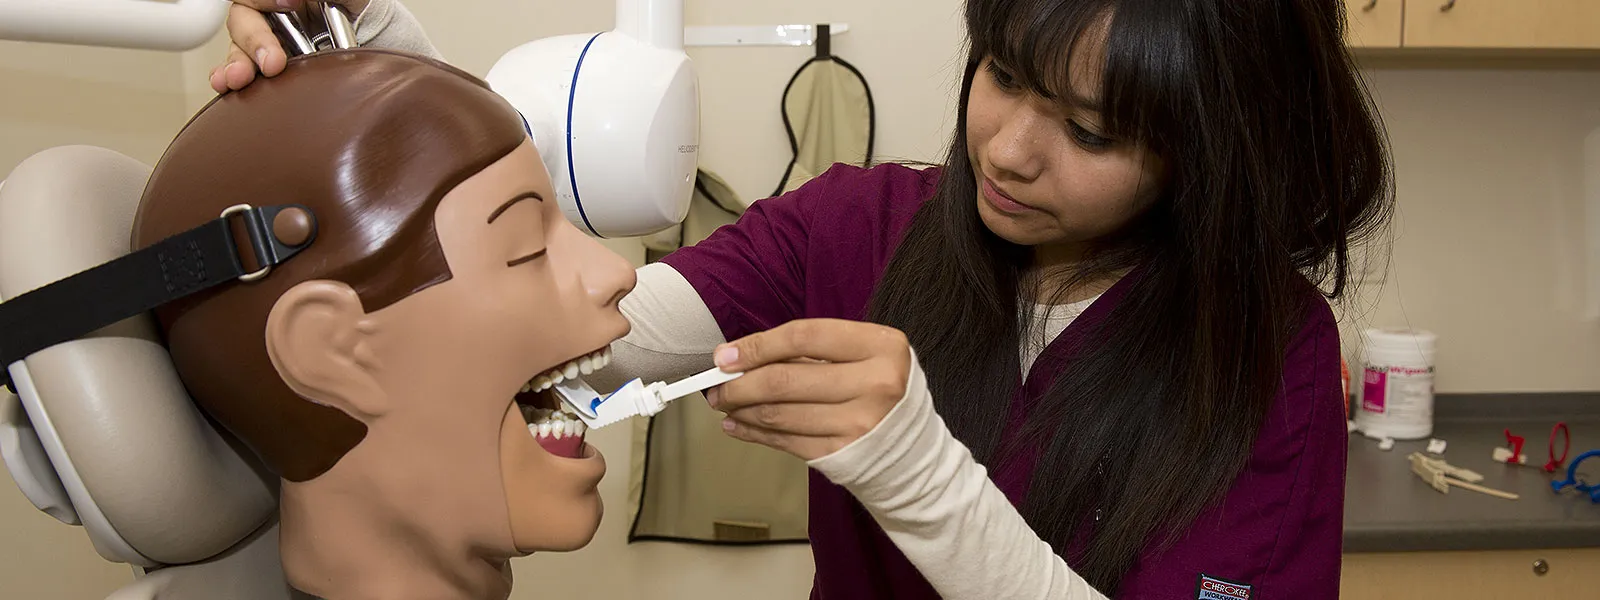 Female dental technician working with equipment on practice manikin.